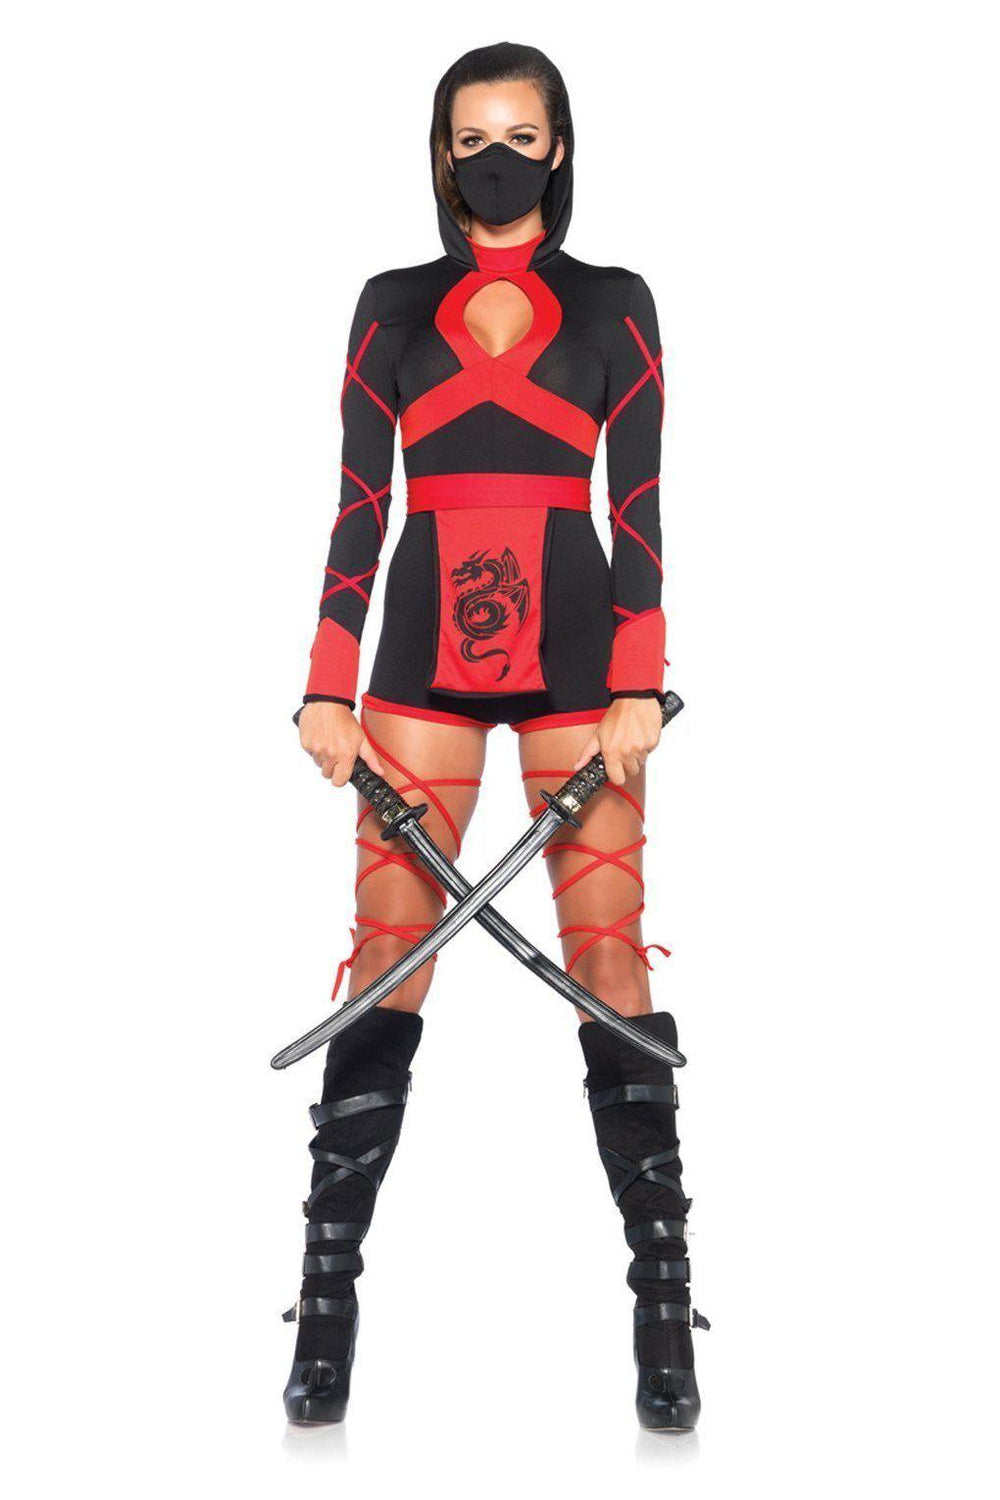 Sexy Dragon Ninja Costume-Villian Costumes-Leg Avenue-SEXYSHOES.COM